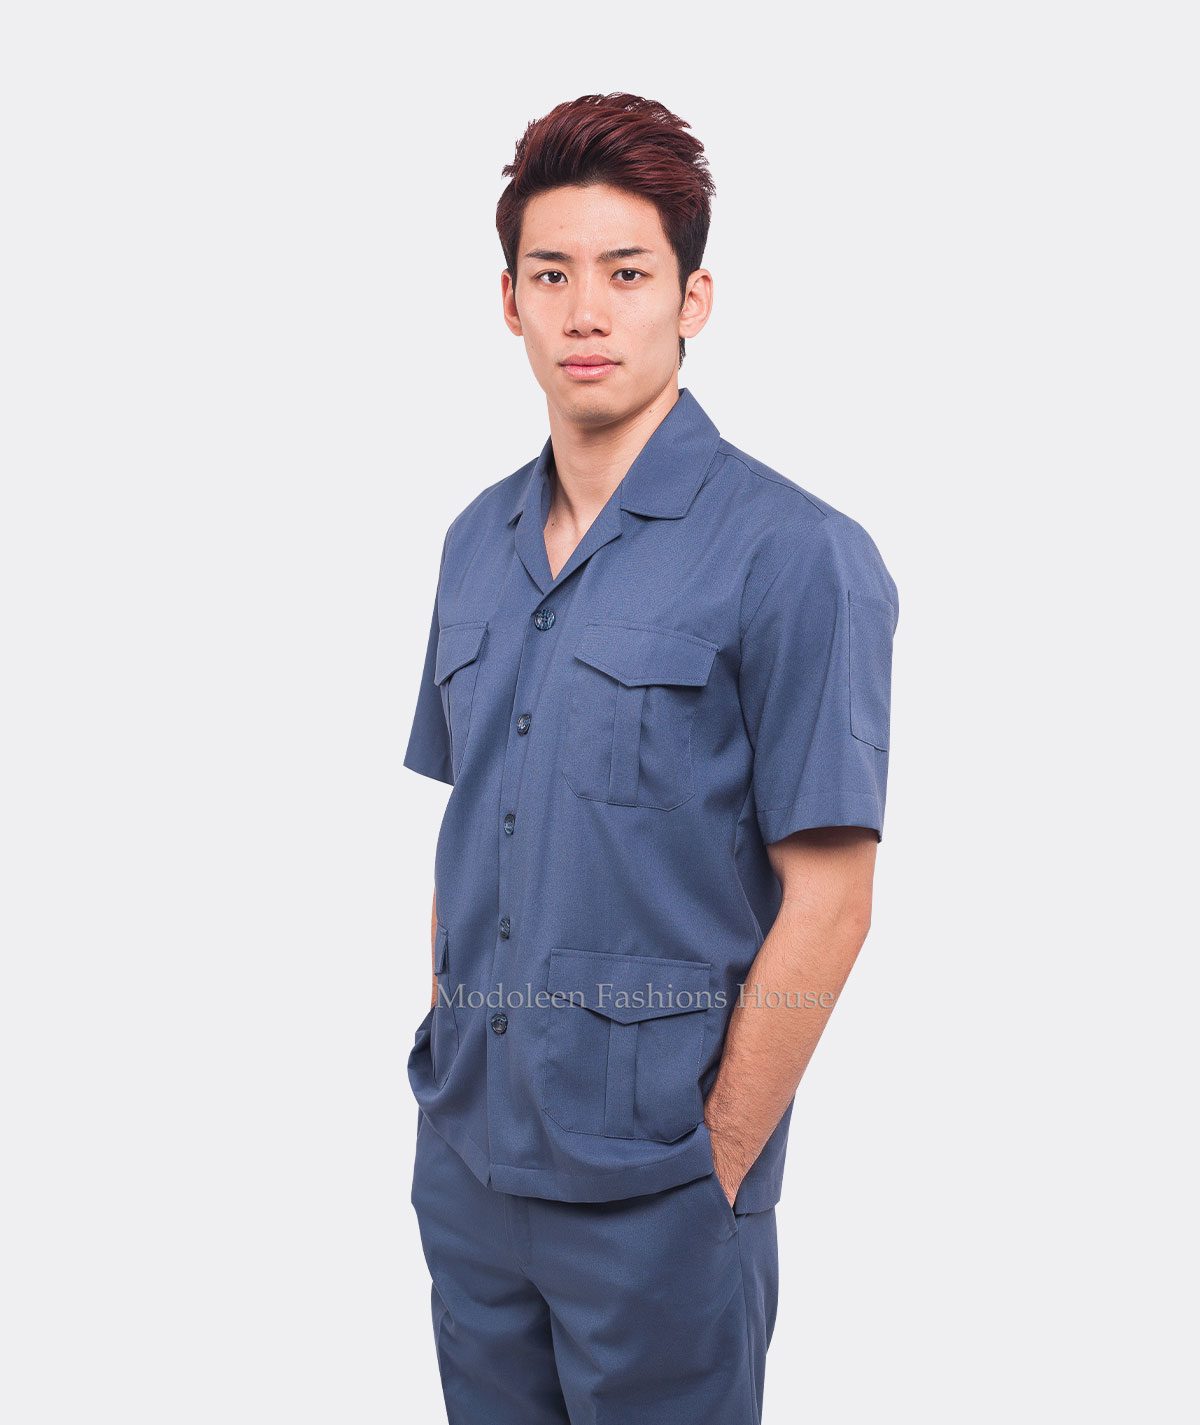 Factory Industrial Operator Technician Security Shirt uniform